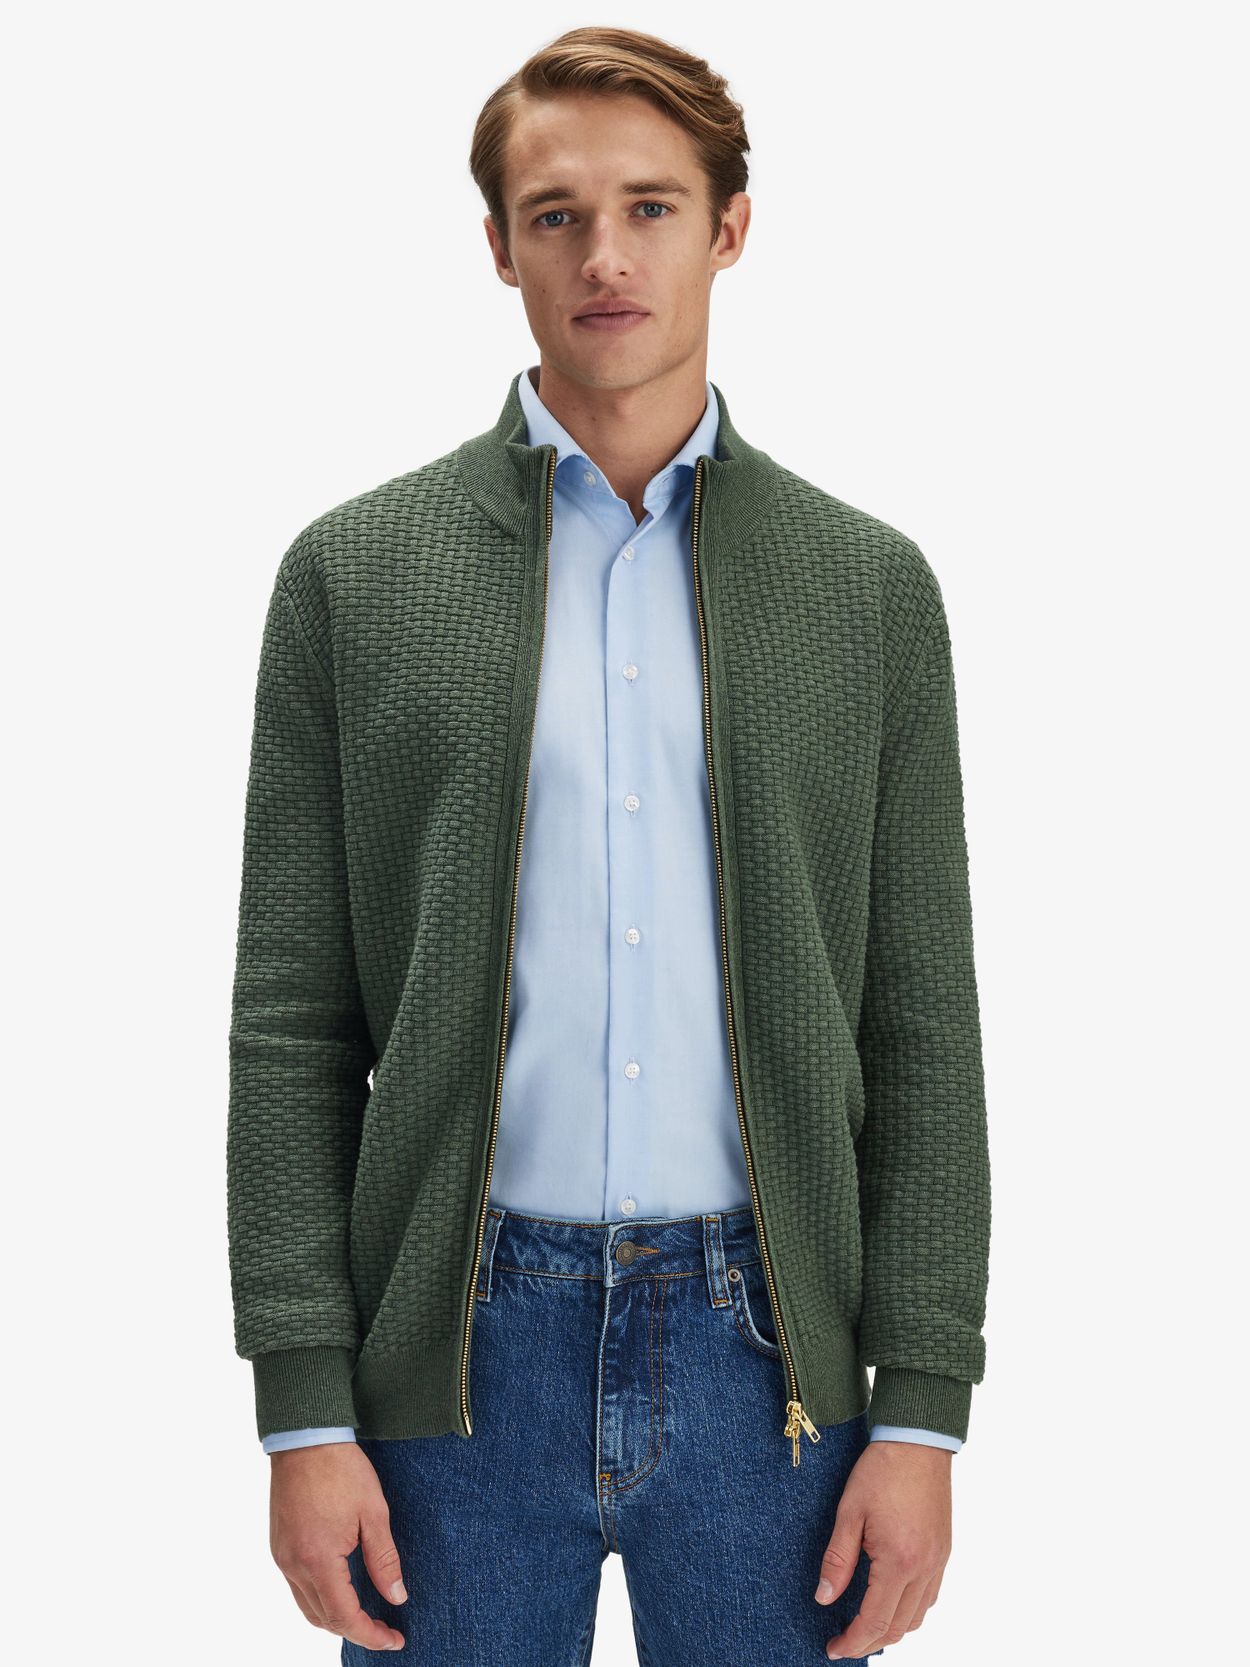 Olive Green Zipper Sweater